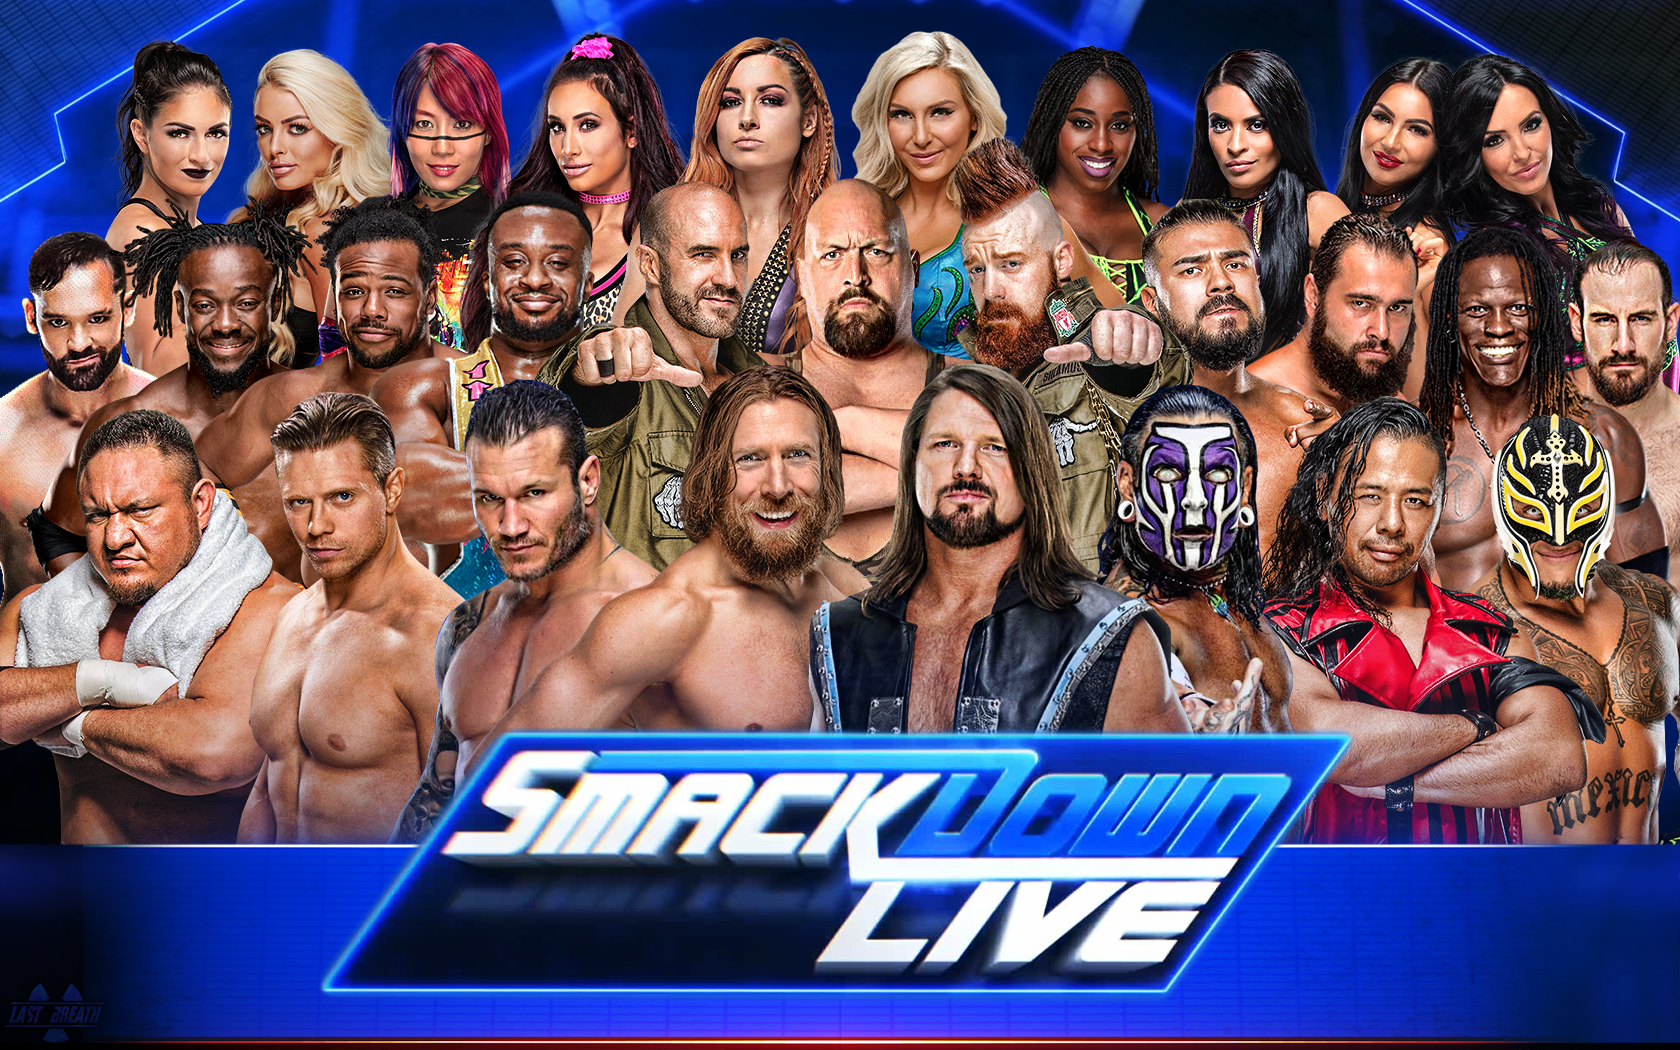 WWE SmackDown Live Wallpaper 2018 by LastBreathGFX on DeviantArt